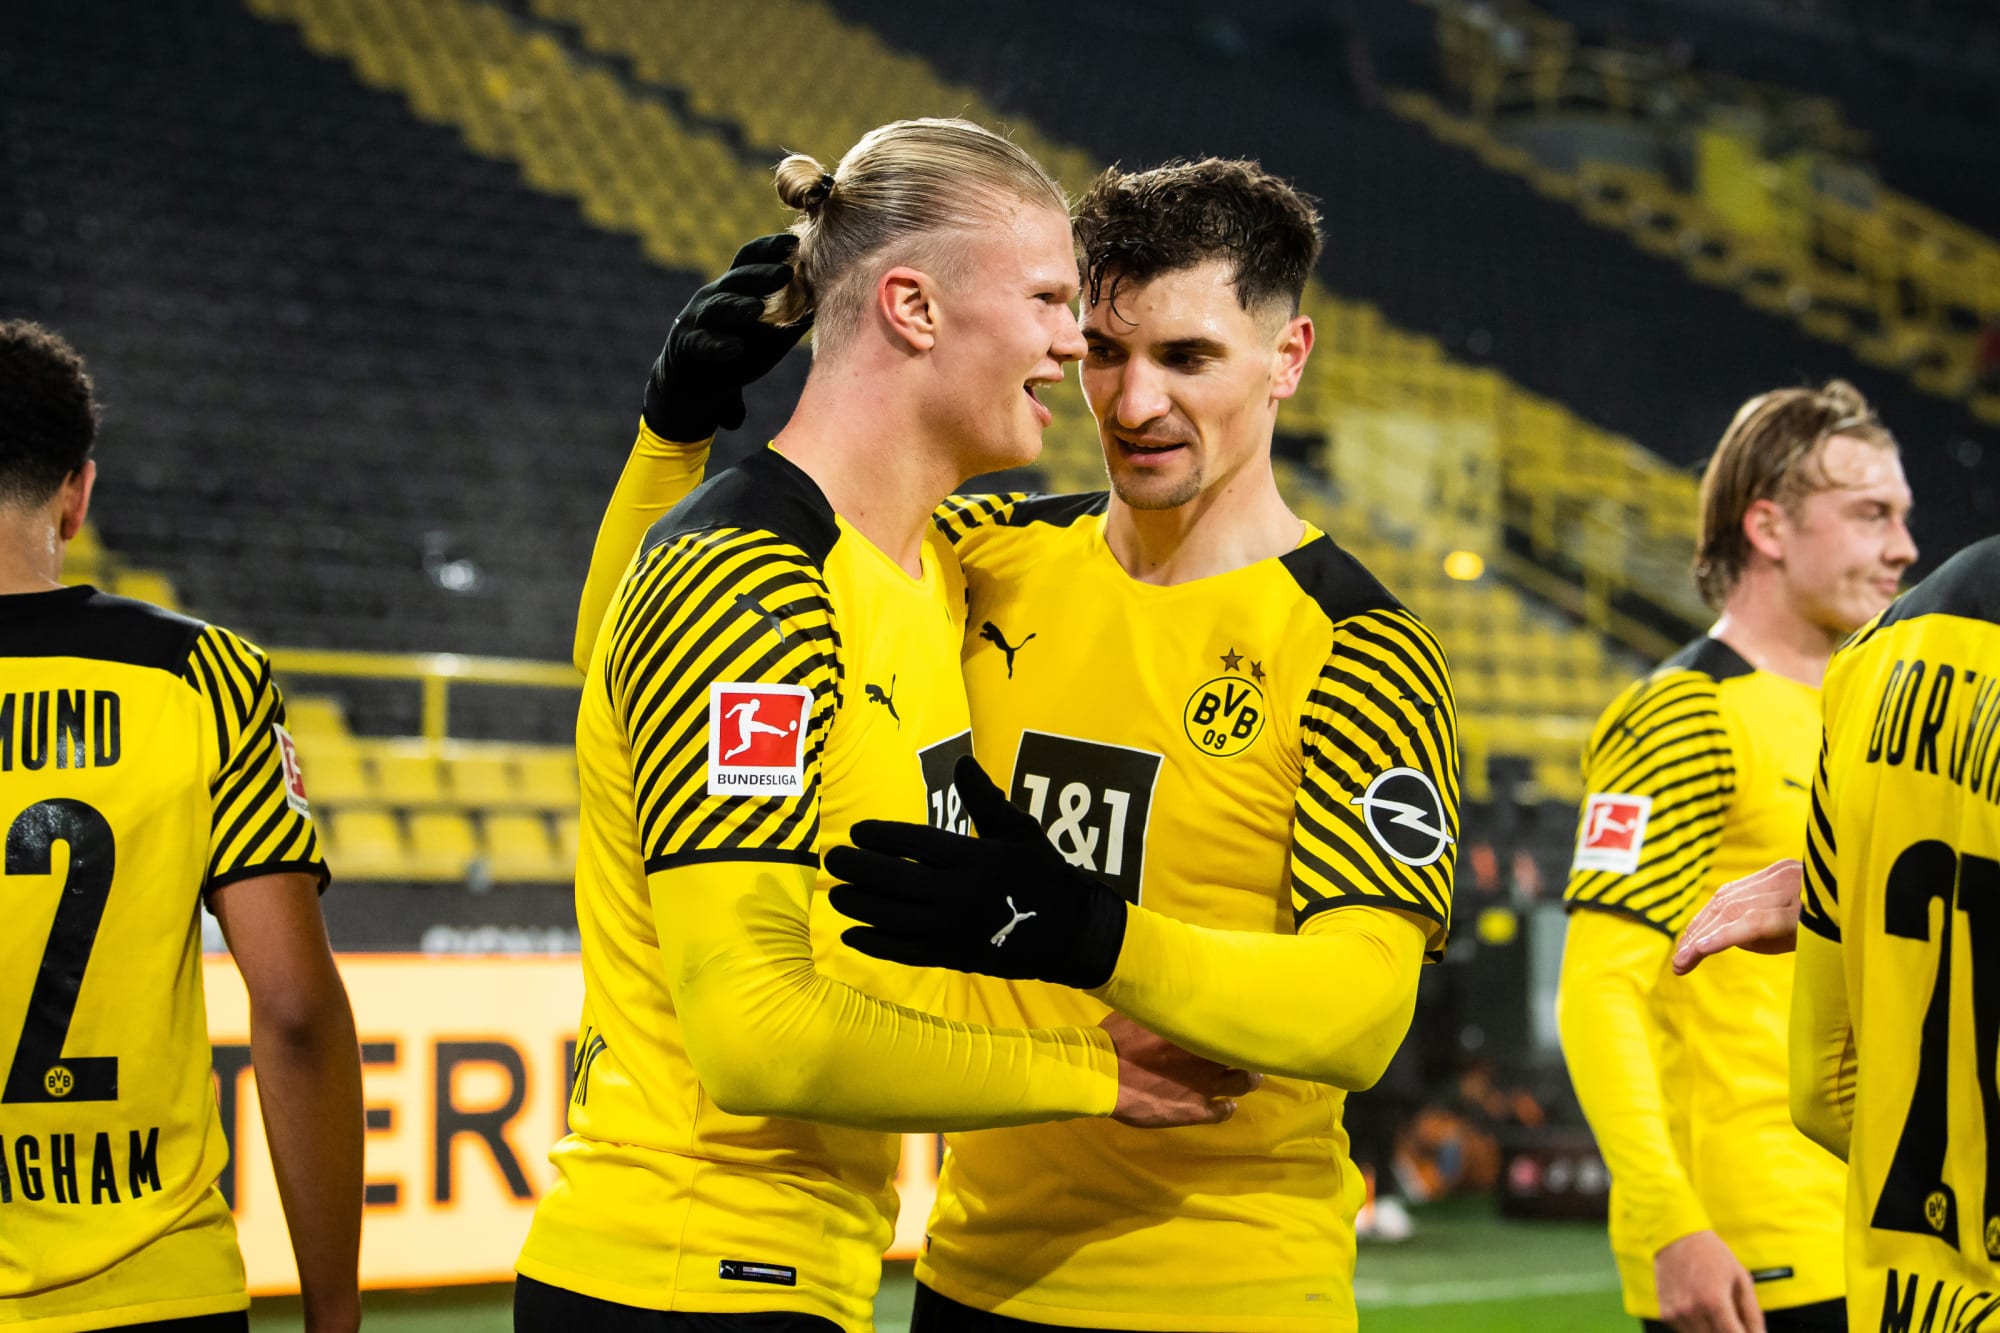 Expected Borussia Dortmund lineup for TSG Hoffenheim clash